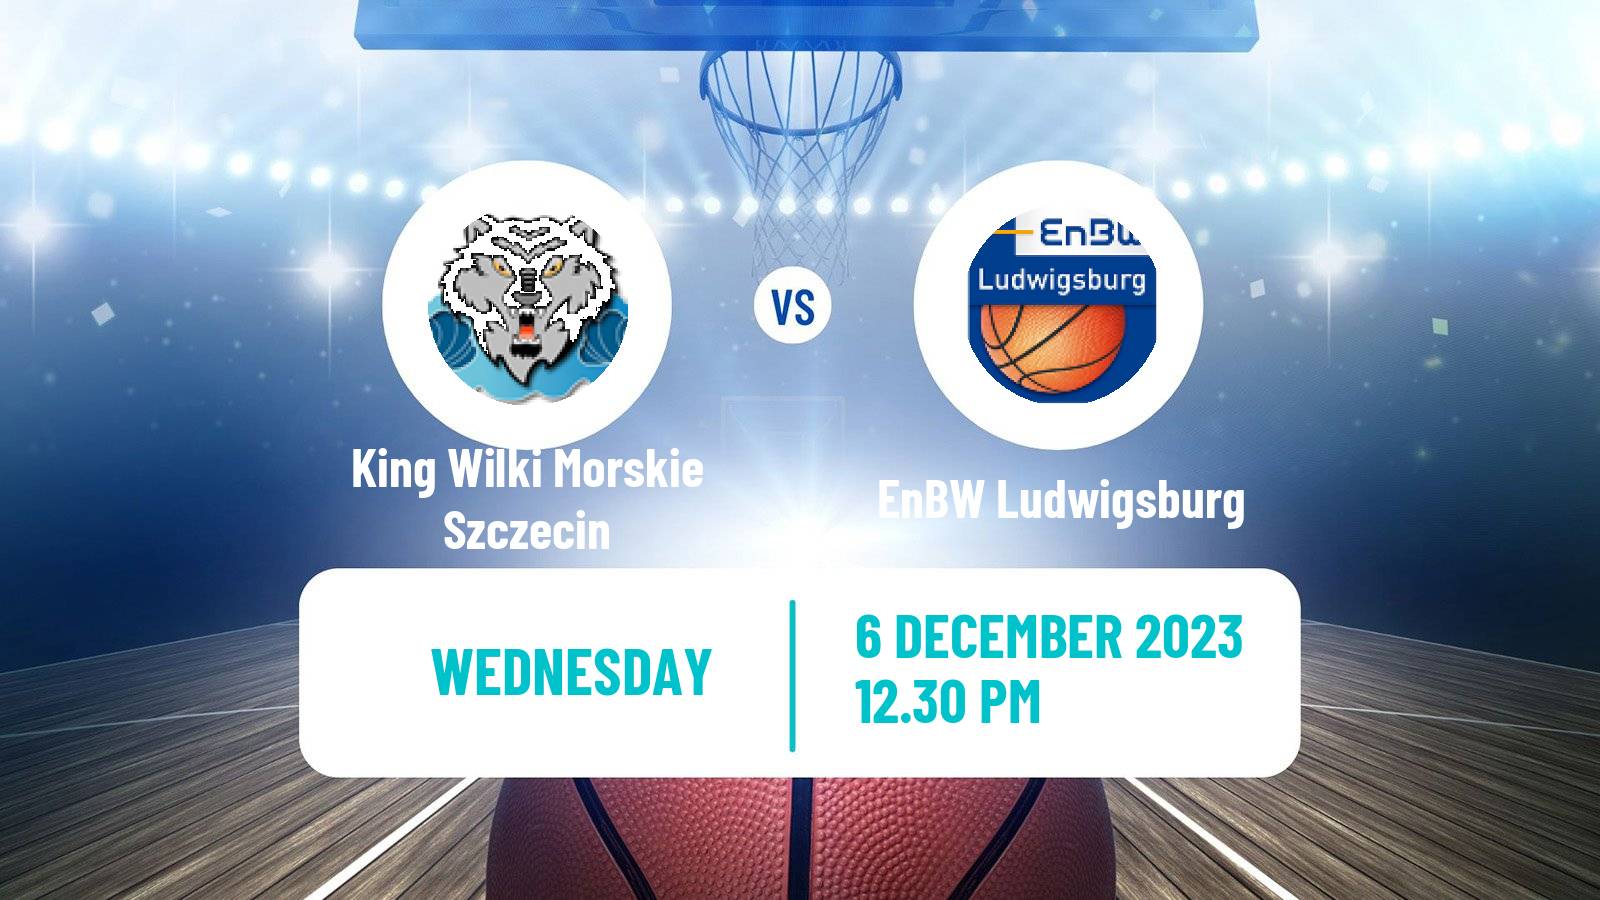 Basketball Champions League Basketball King Wilki Morskie Szczecin - EnBW Ludwigsburg